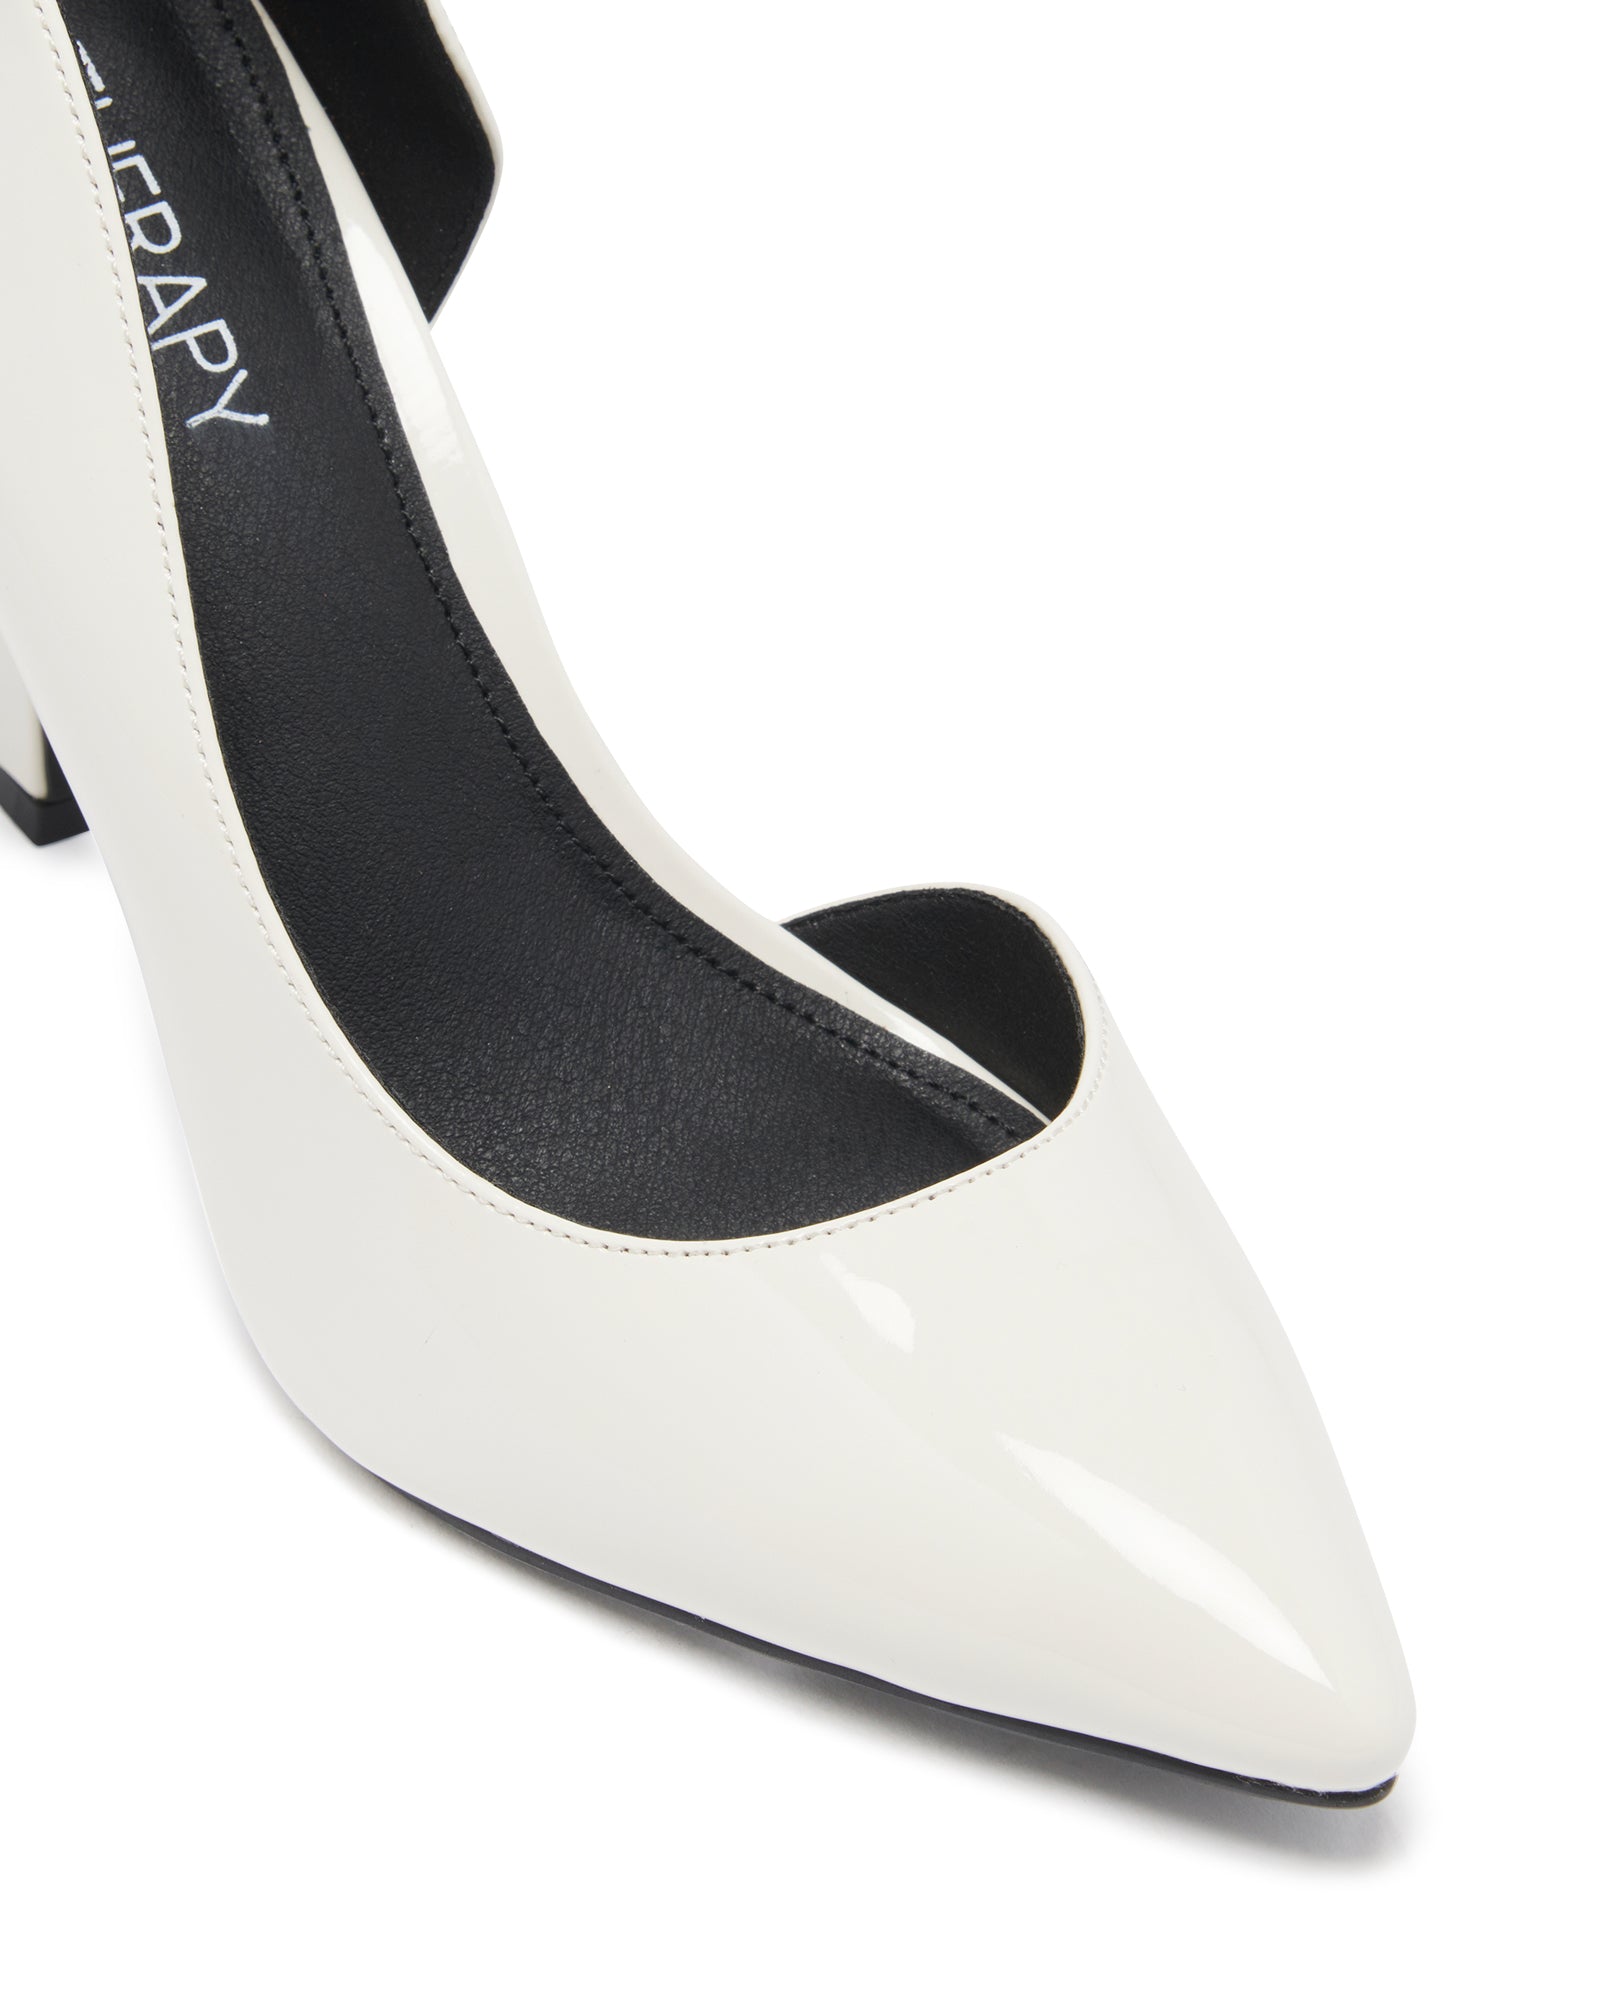 Therapy Shoes Temptress Bone Patent | Women's Heels | Pumps | Stiletto | Flare Heel